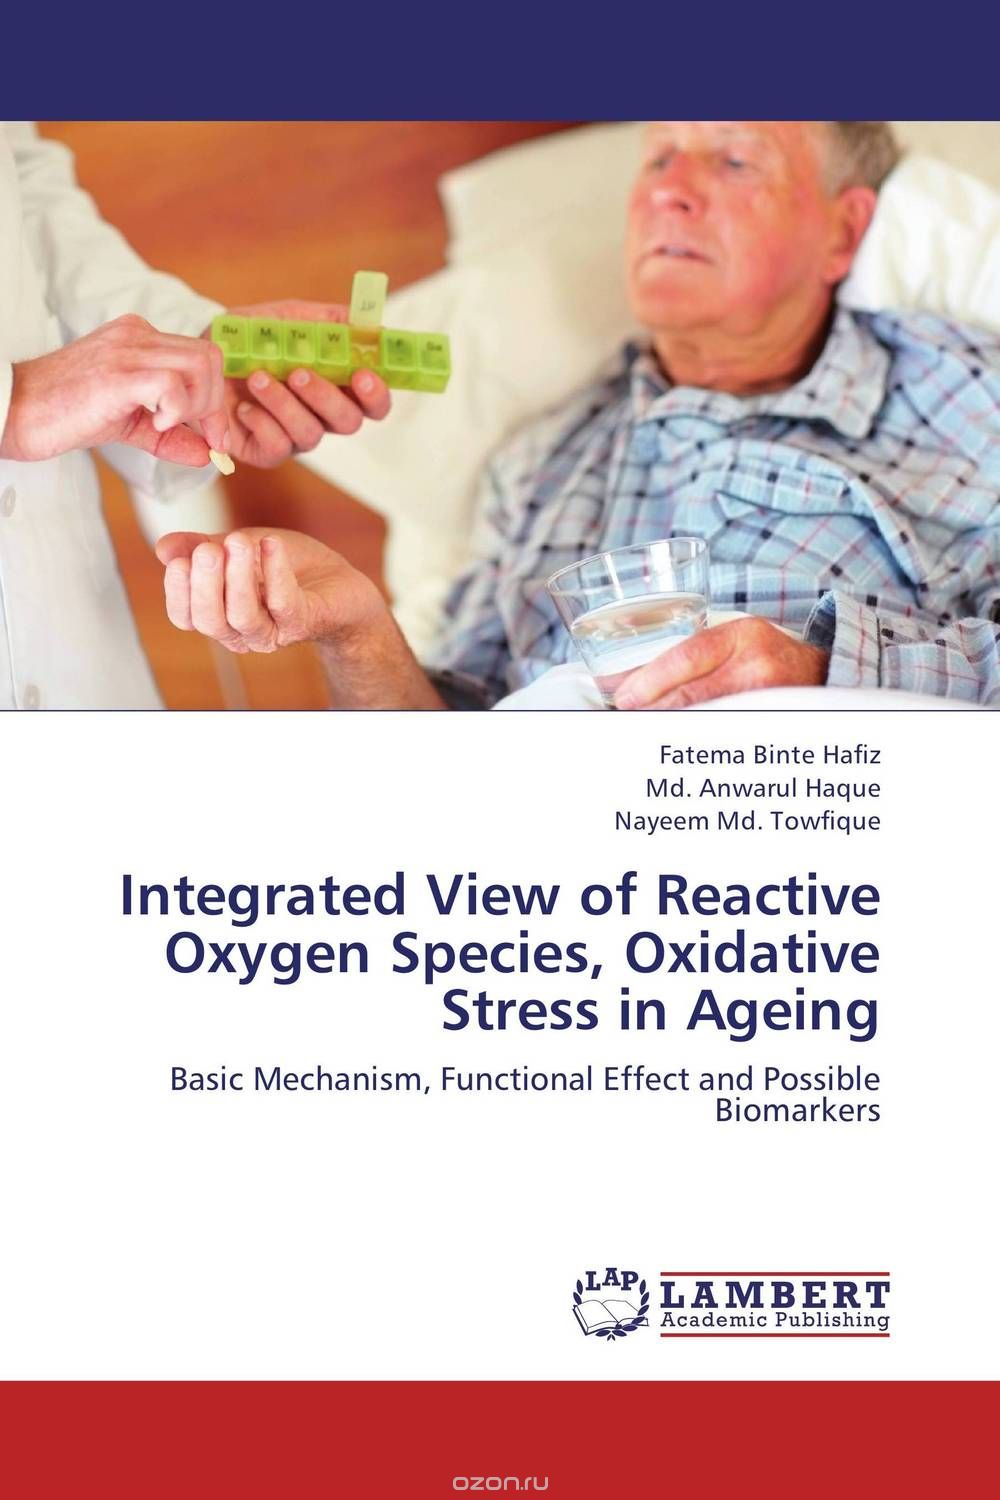 Скачать книгу "Integrated View of Reactive Oxygen Species, Oxidative Stress in Ageing"